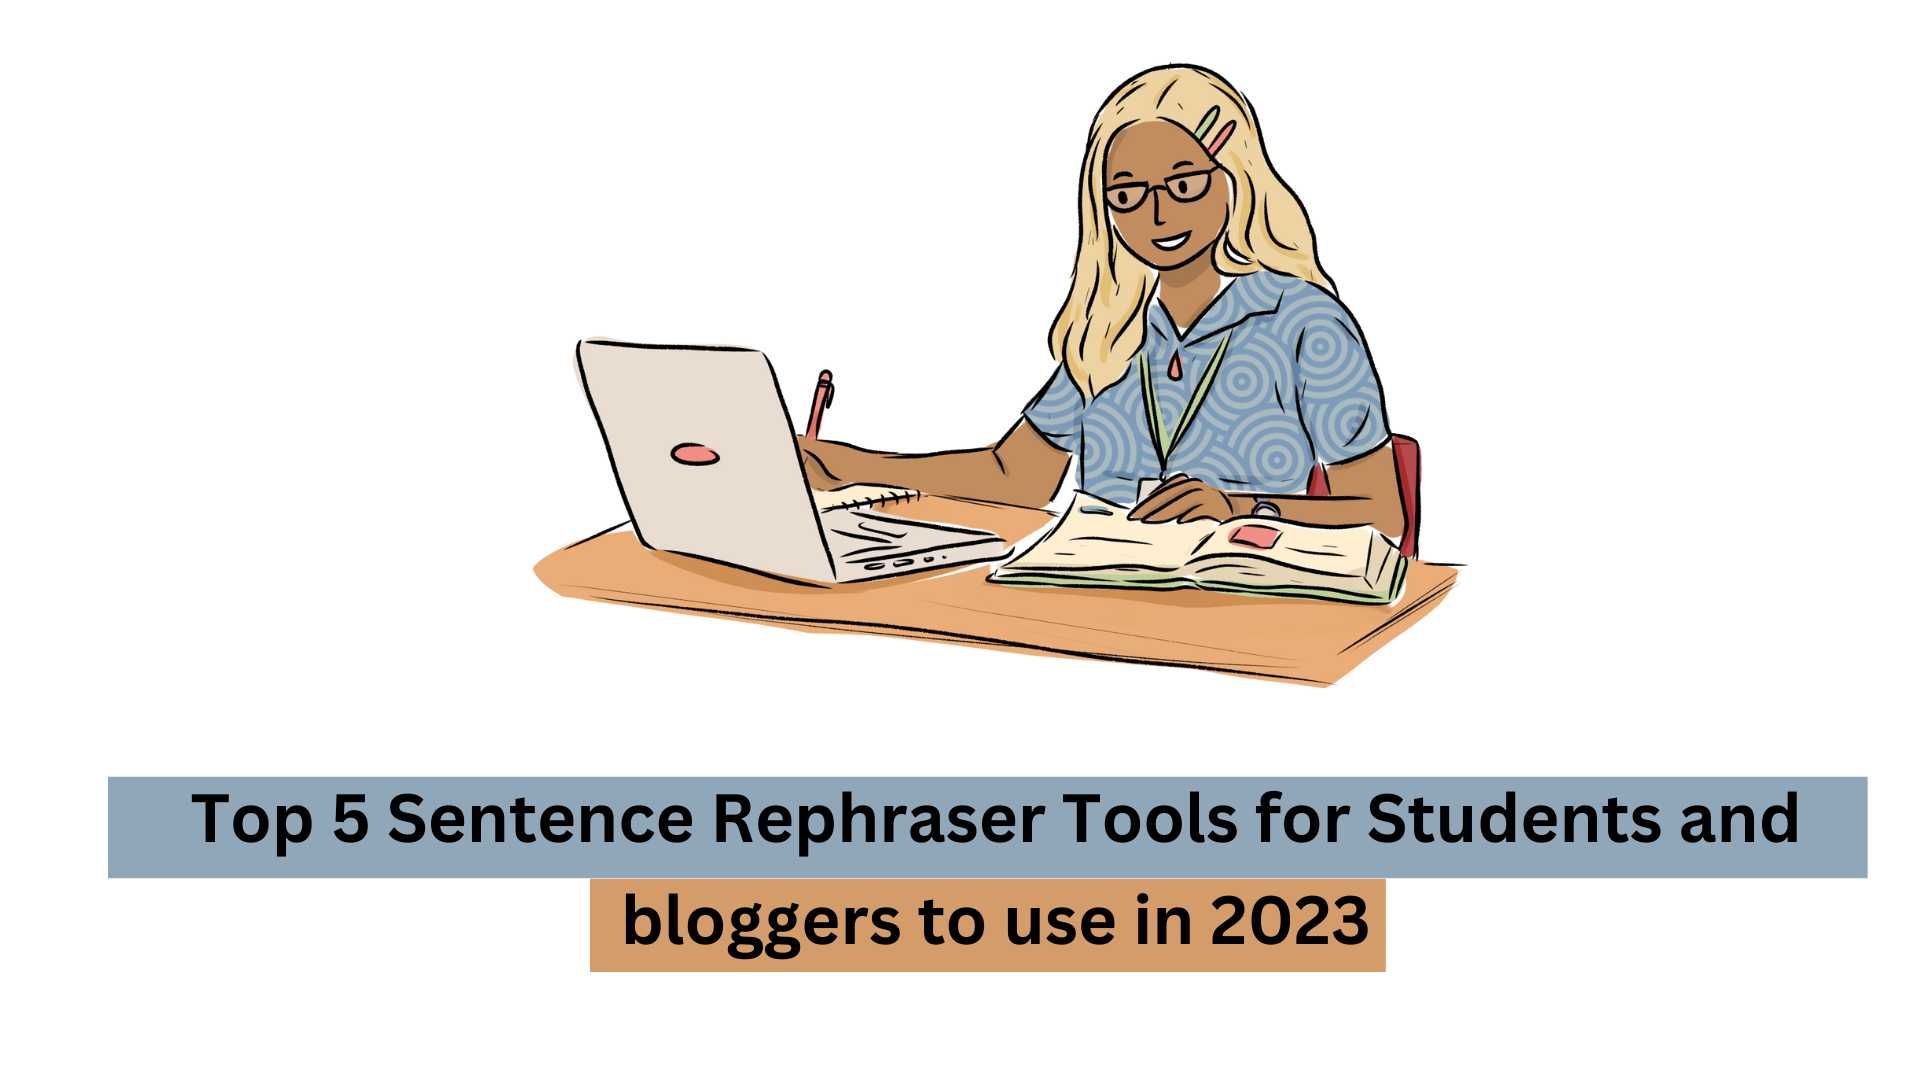 Sentence Rephraser Tools